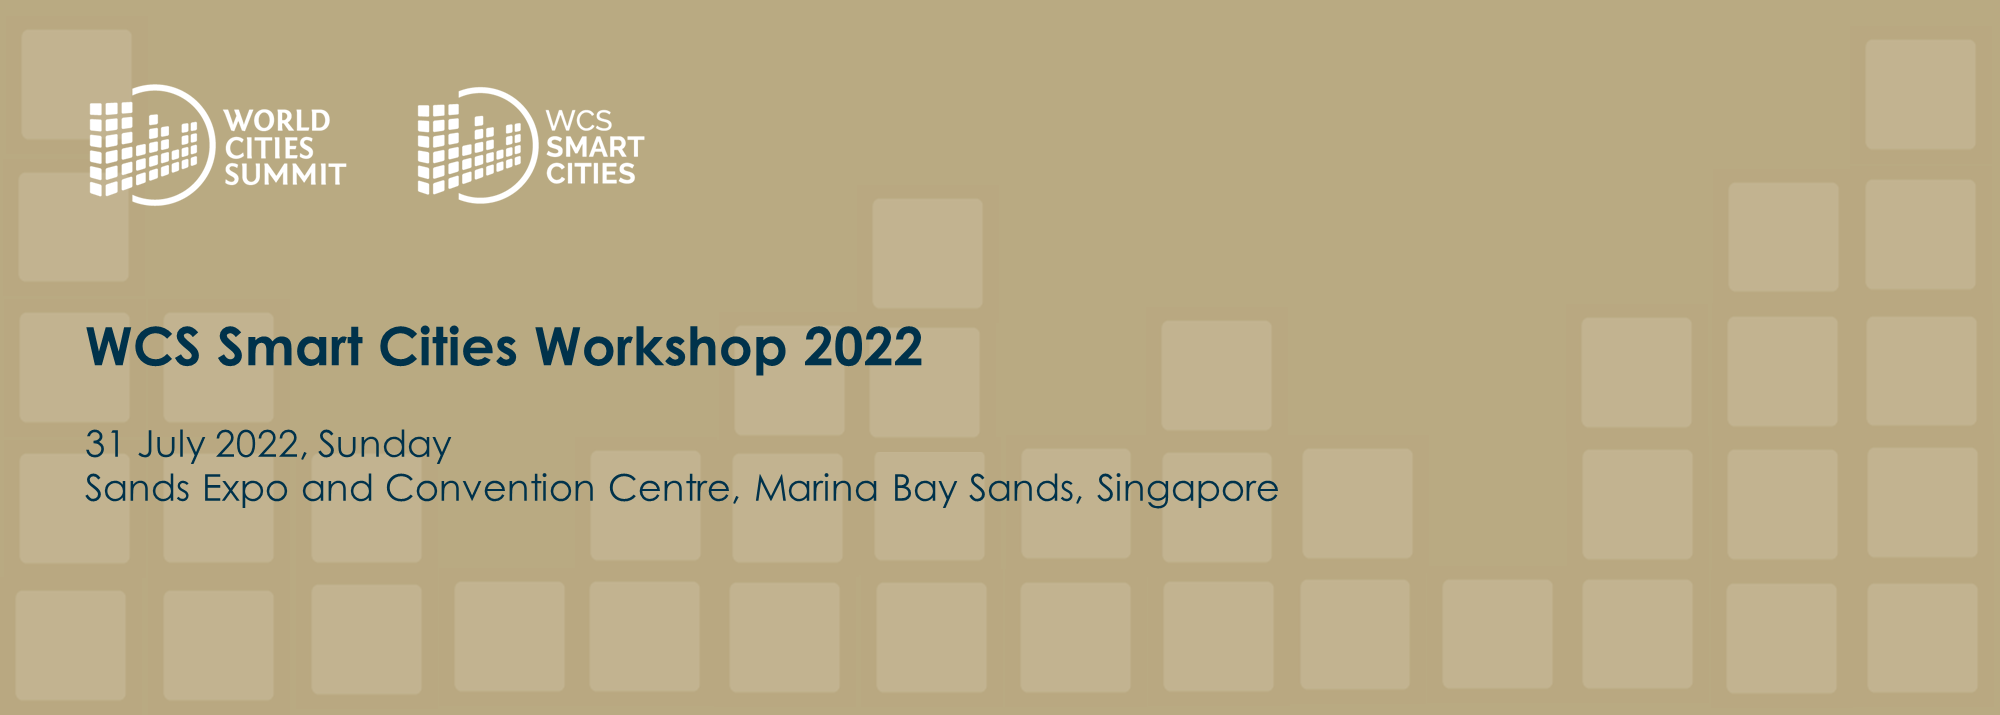 WCS 2022 Smart Cities Workshop Image.png